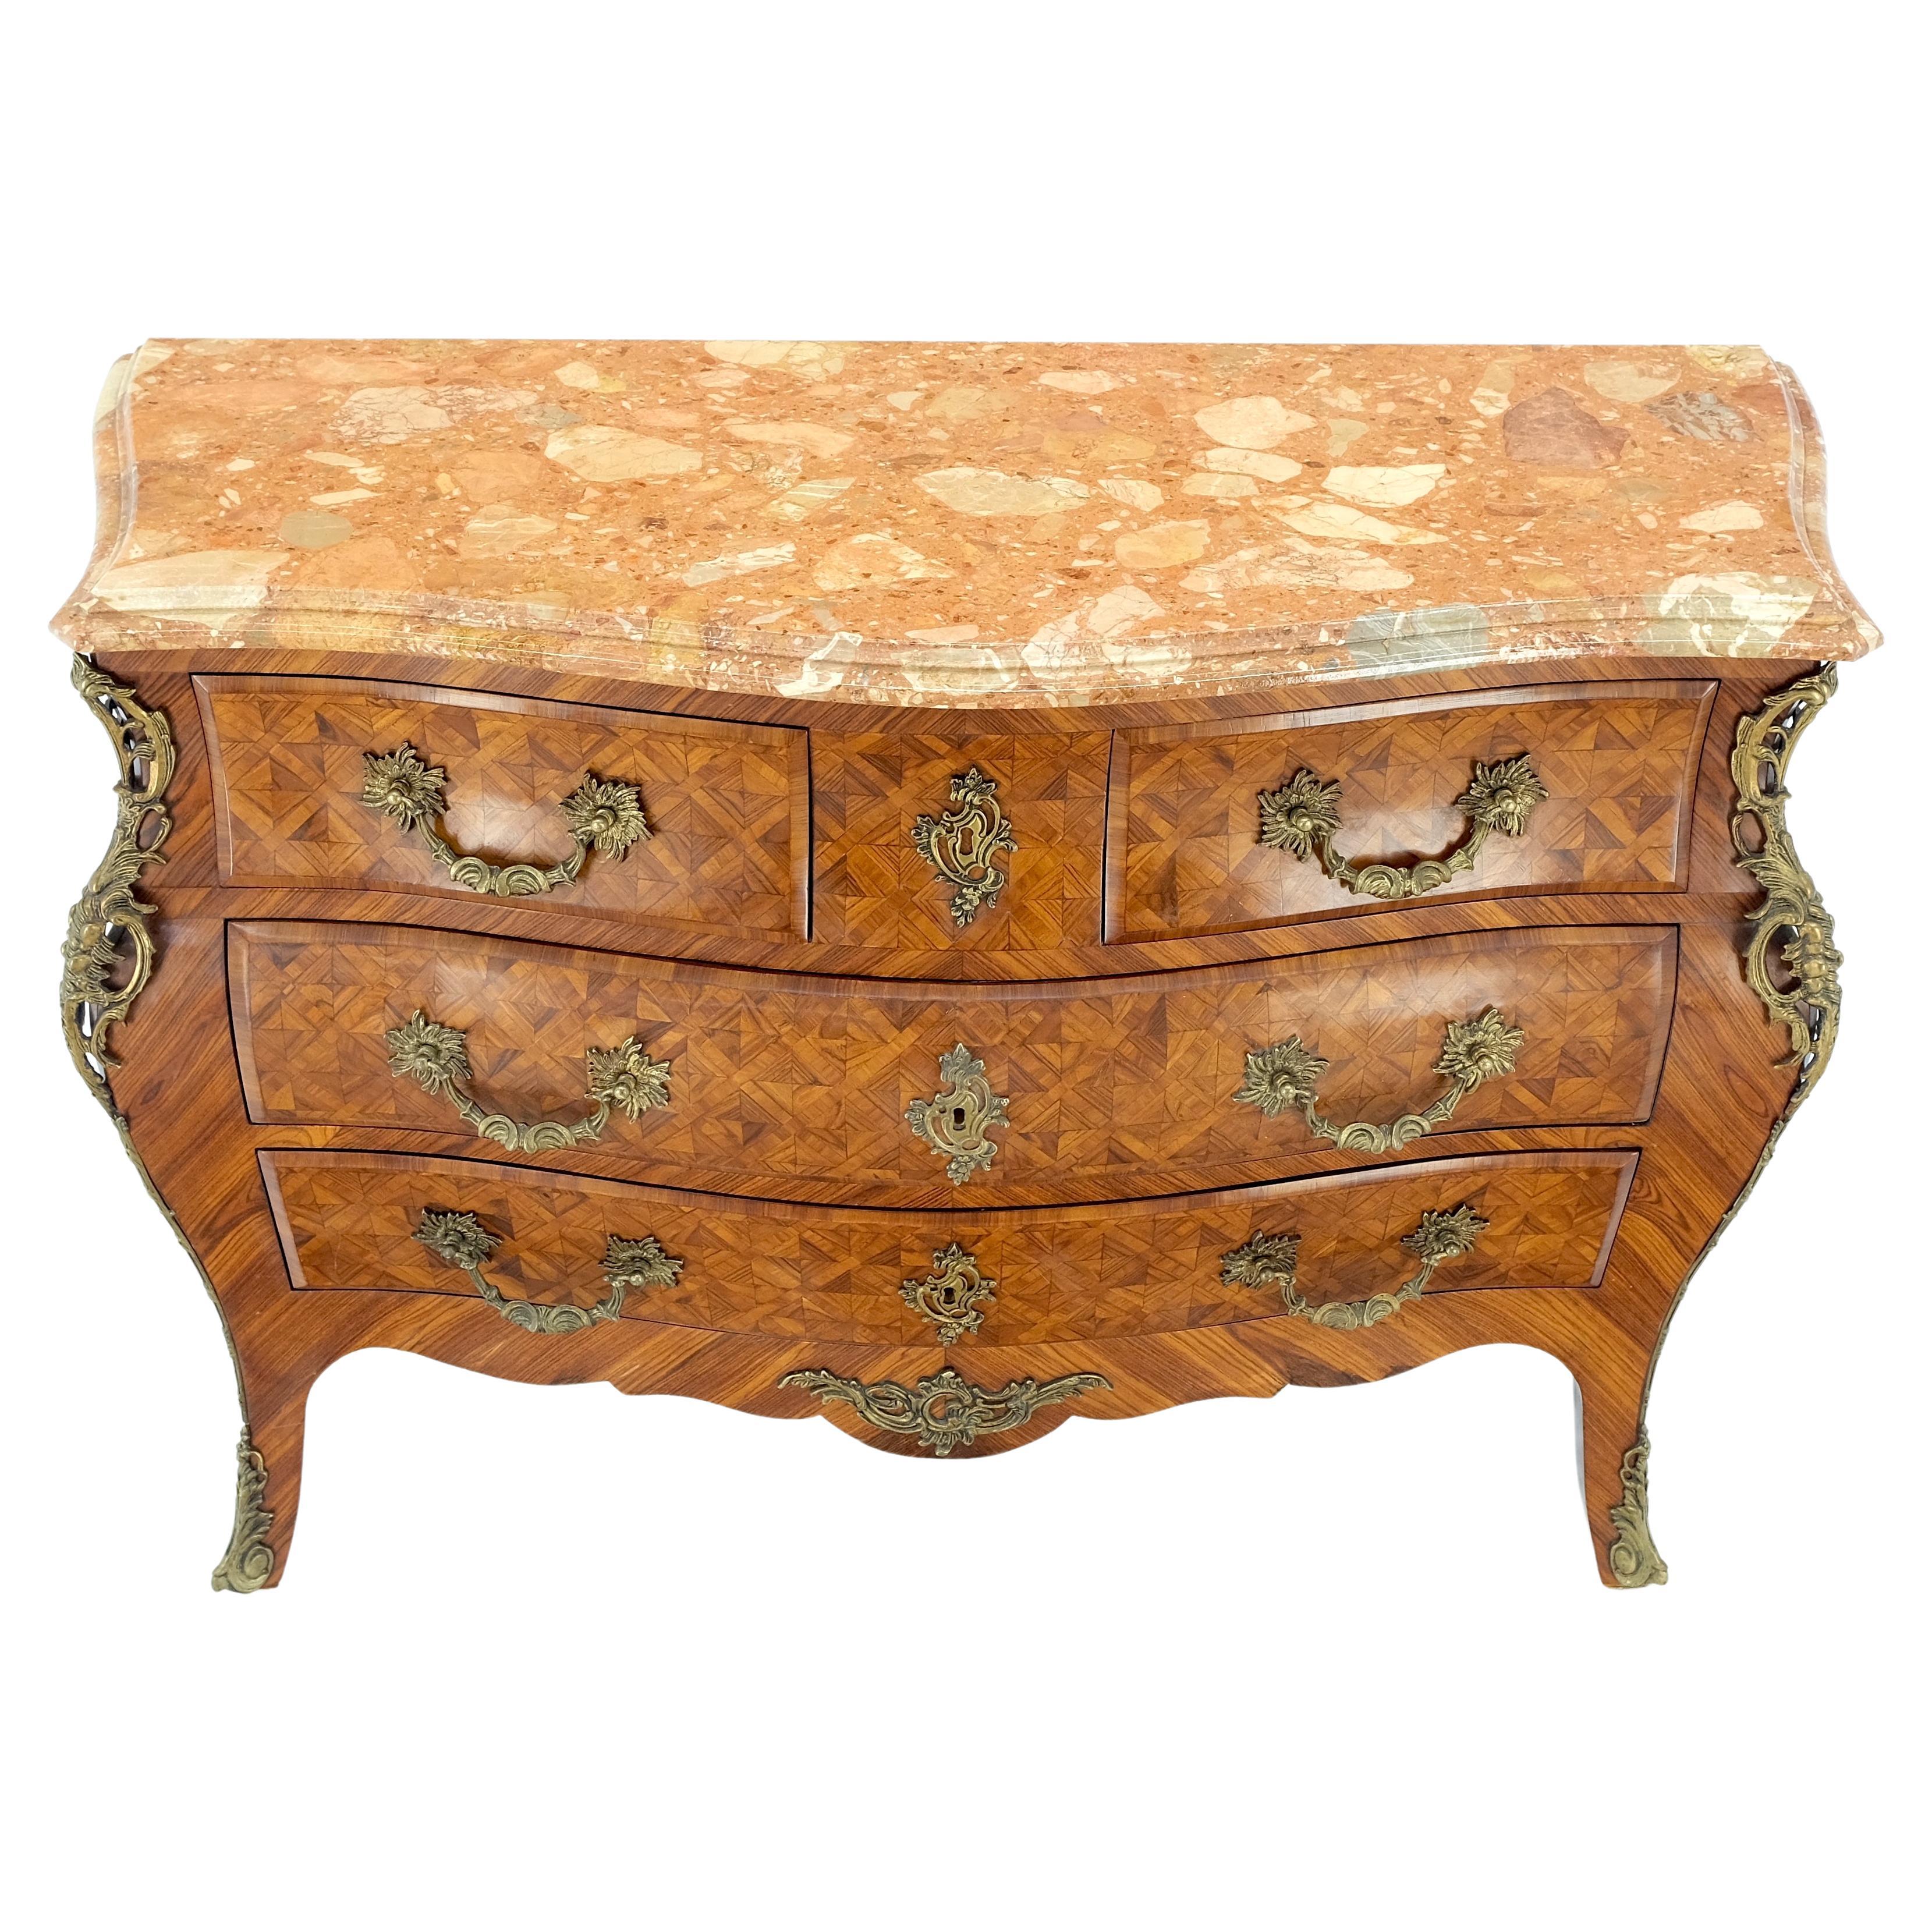 Bombe Bronze Ormolu Marble Top French Satinwood Louis XV 3 Drawers Dresser Commode MINT!
Beautiful Parquetry Veneer Work!